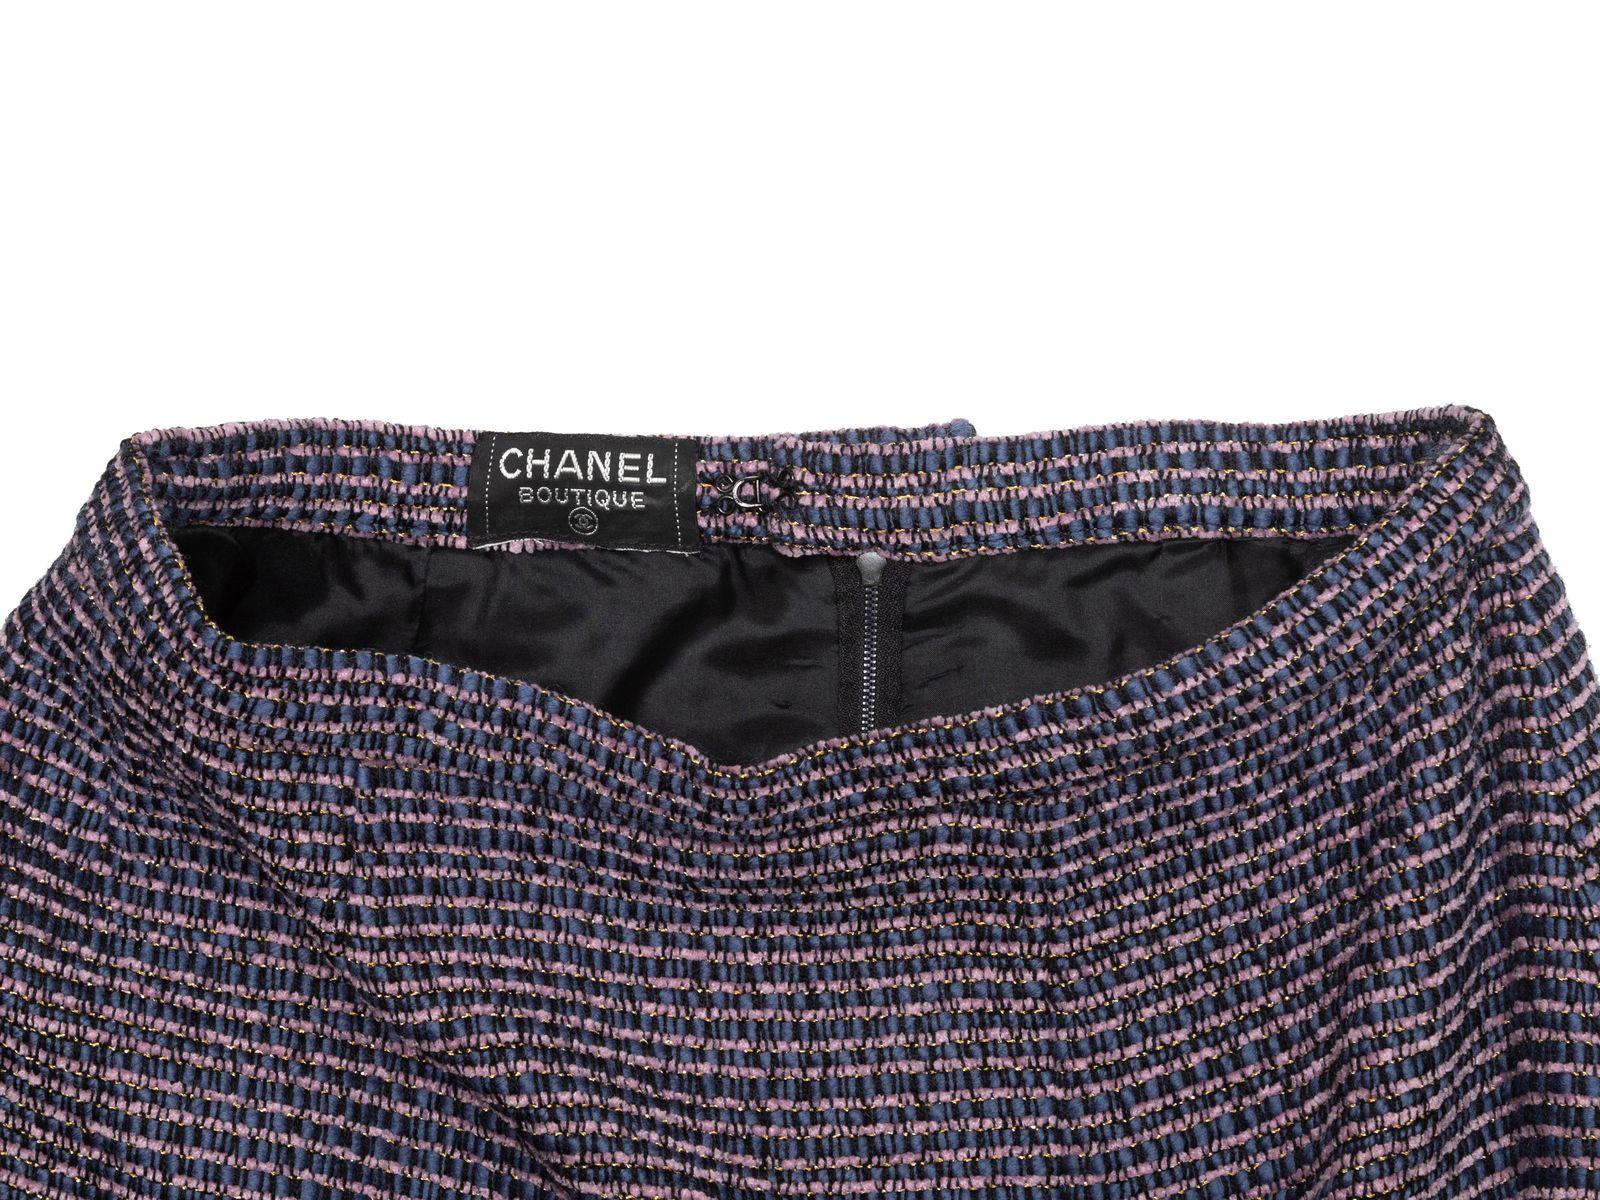 Chanel Boutique Blue & Multicolor Tweed Pencil Skirt 2